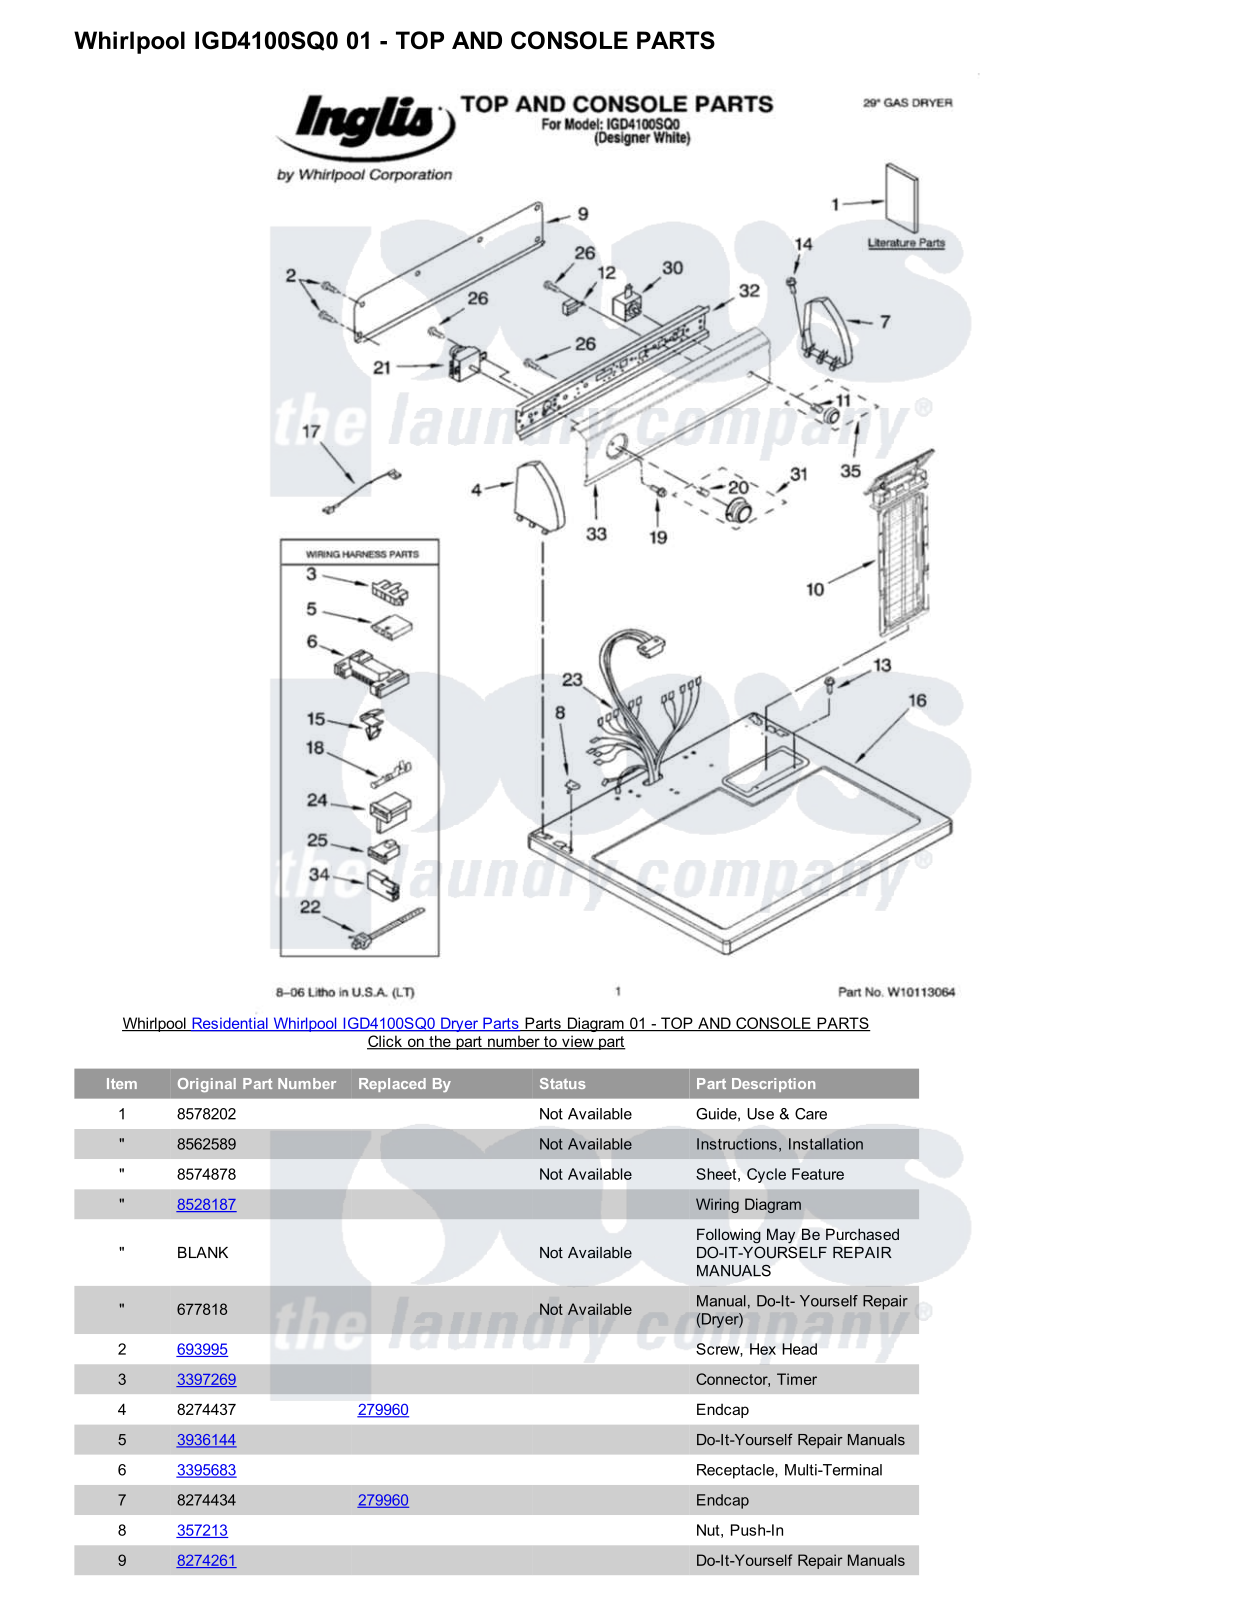 Whirlpool IGD4100SQ0 Parts Diagram